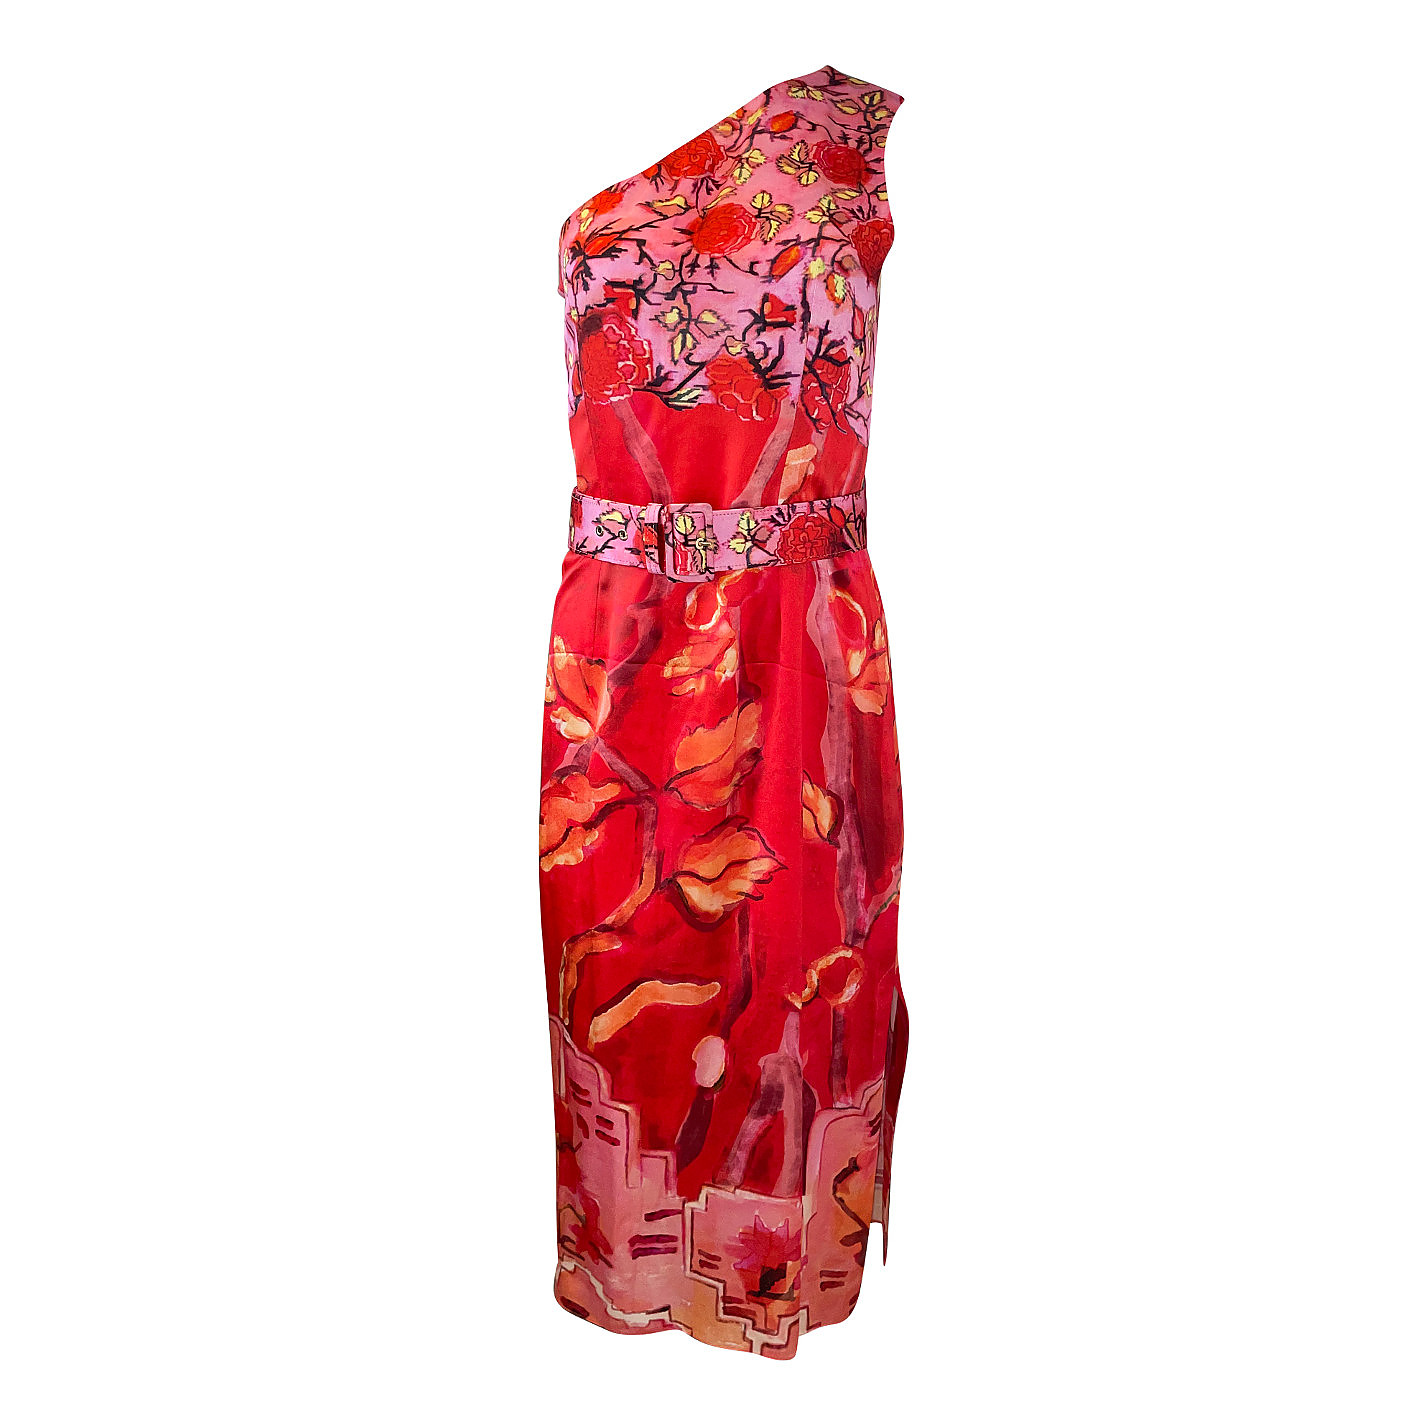 Peter Pilotto One-Shoulder Floral Print Dress